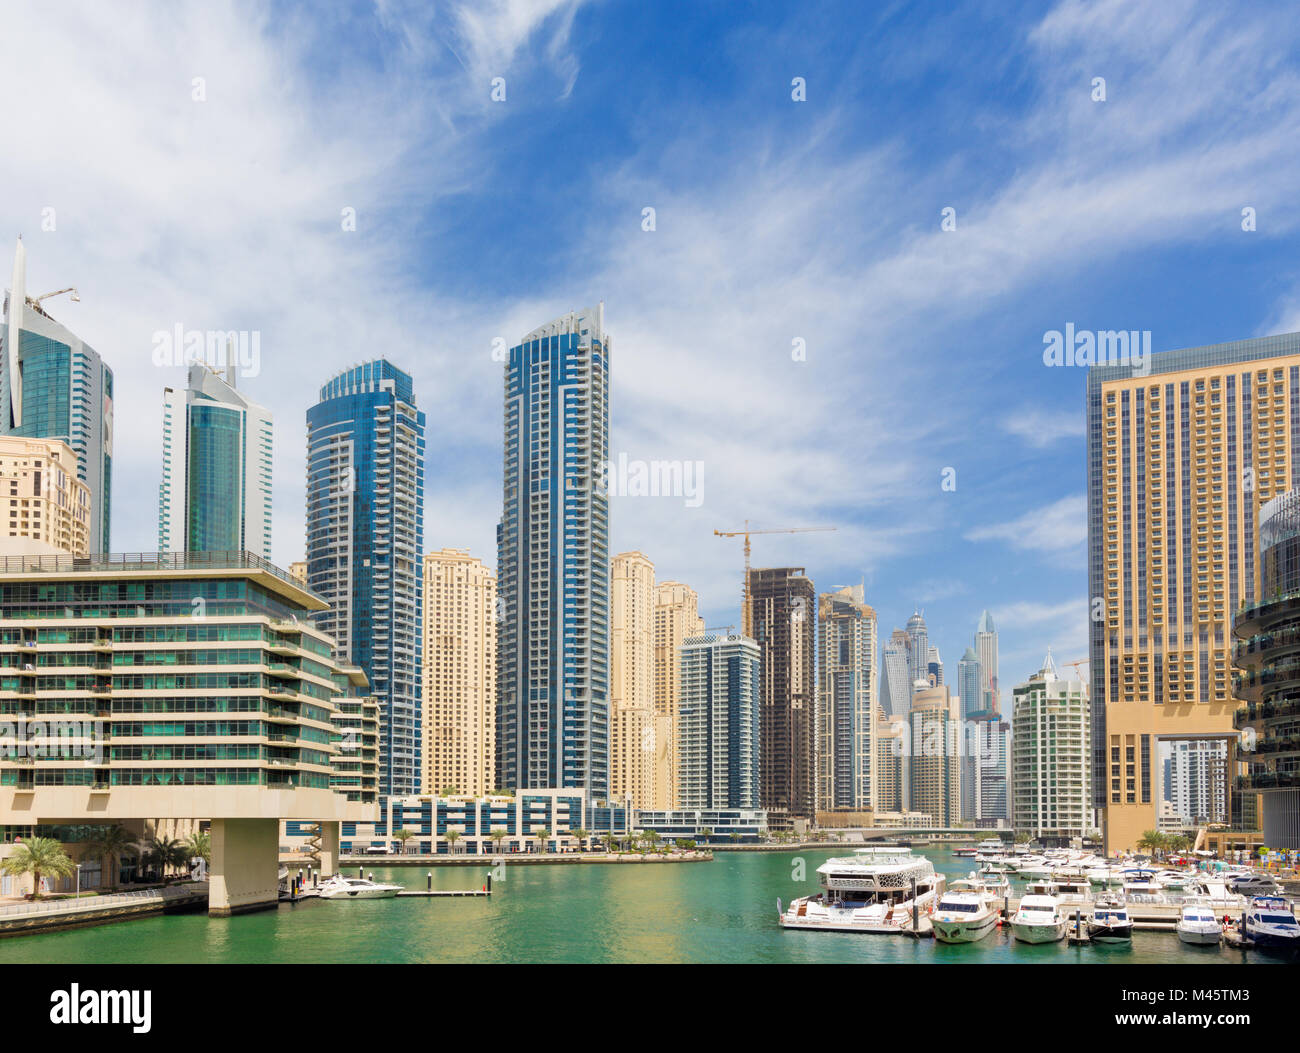 arab, arabic, architecture, building, business, city, cityscape, dubai, emirates, gulf, high, hotels, light, luxury, marina, modern, panorama, promena Stock Photo